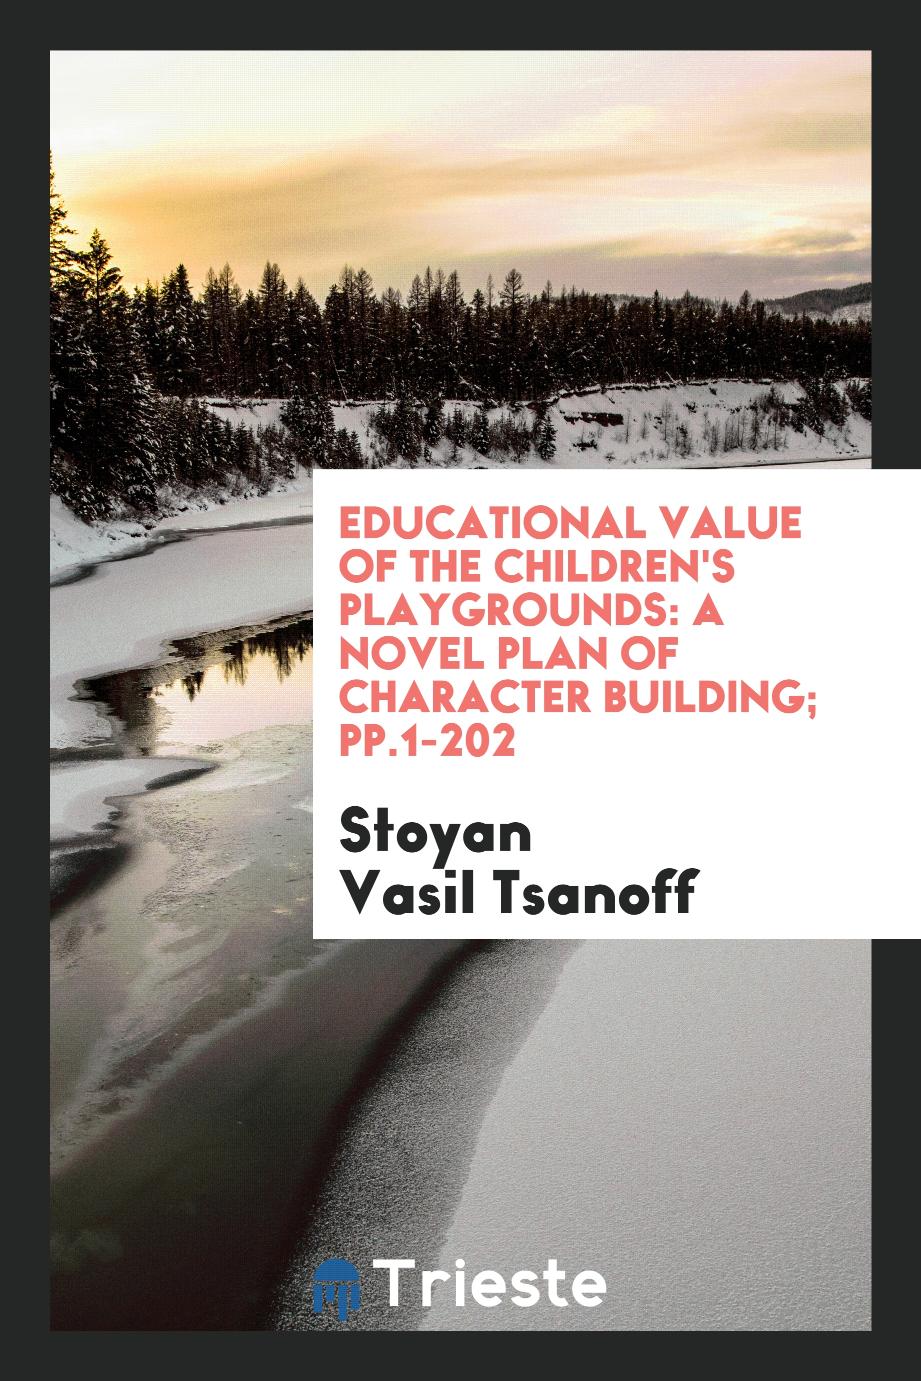 Stoyan Vasil Tsanoff - Educational Value of the Children's Playgrounds: A Novel Plan of Character Building; pp.1-202